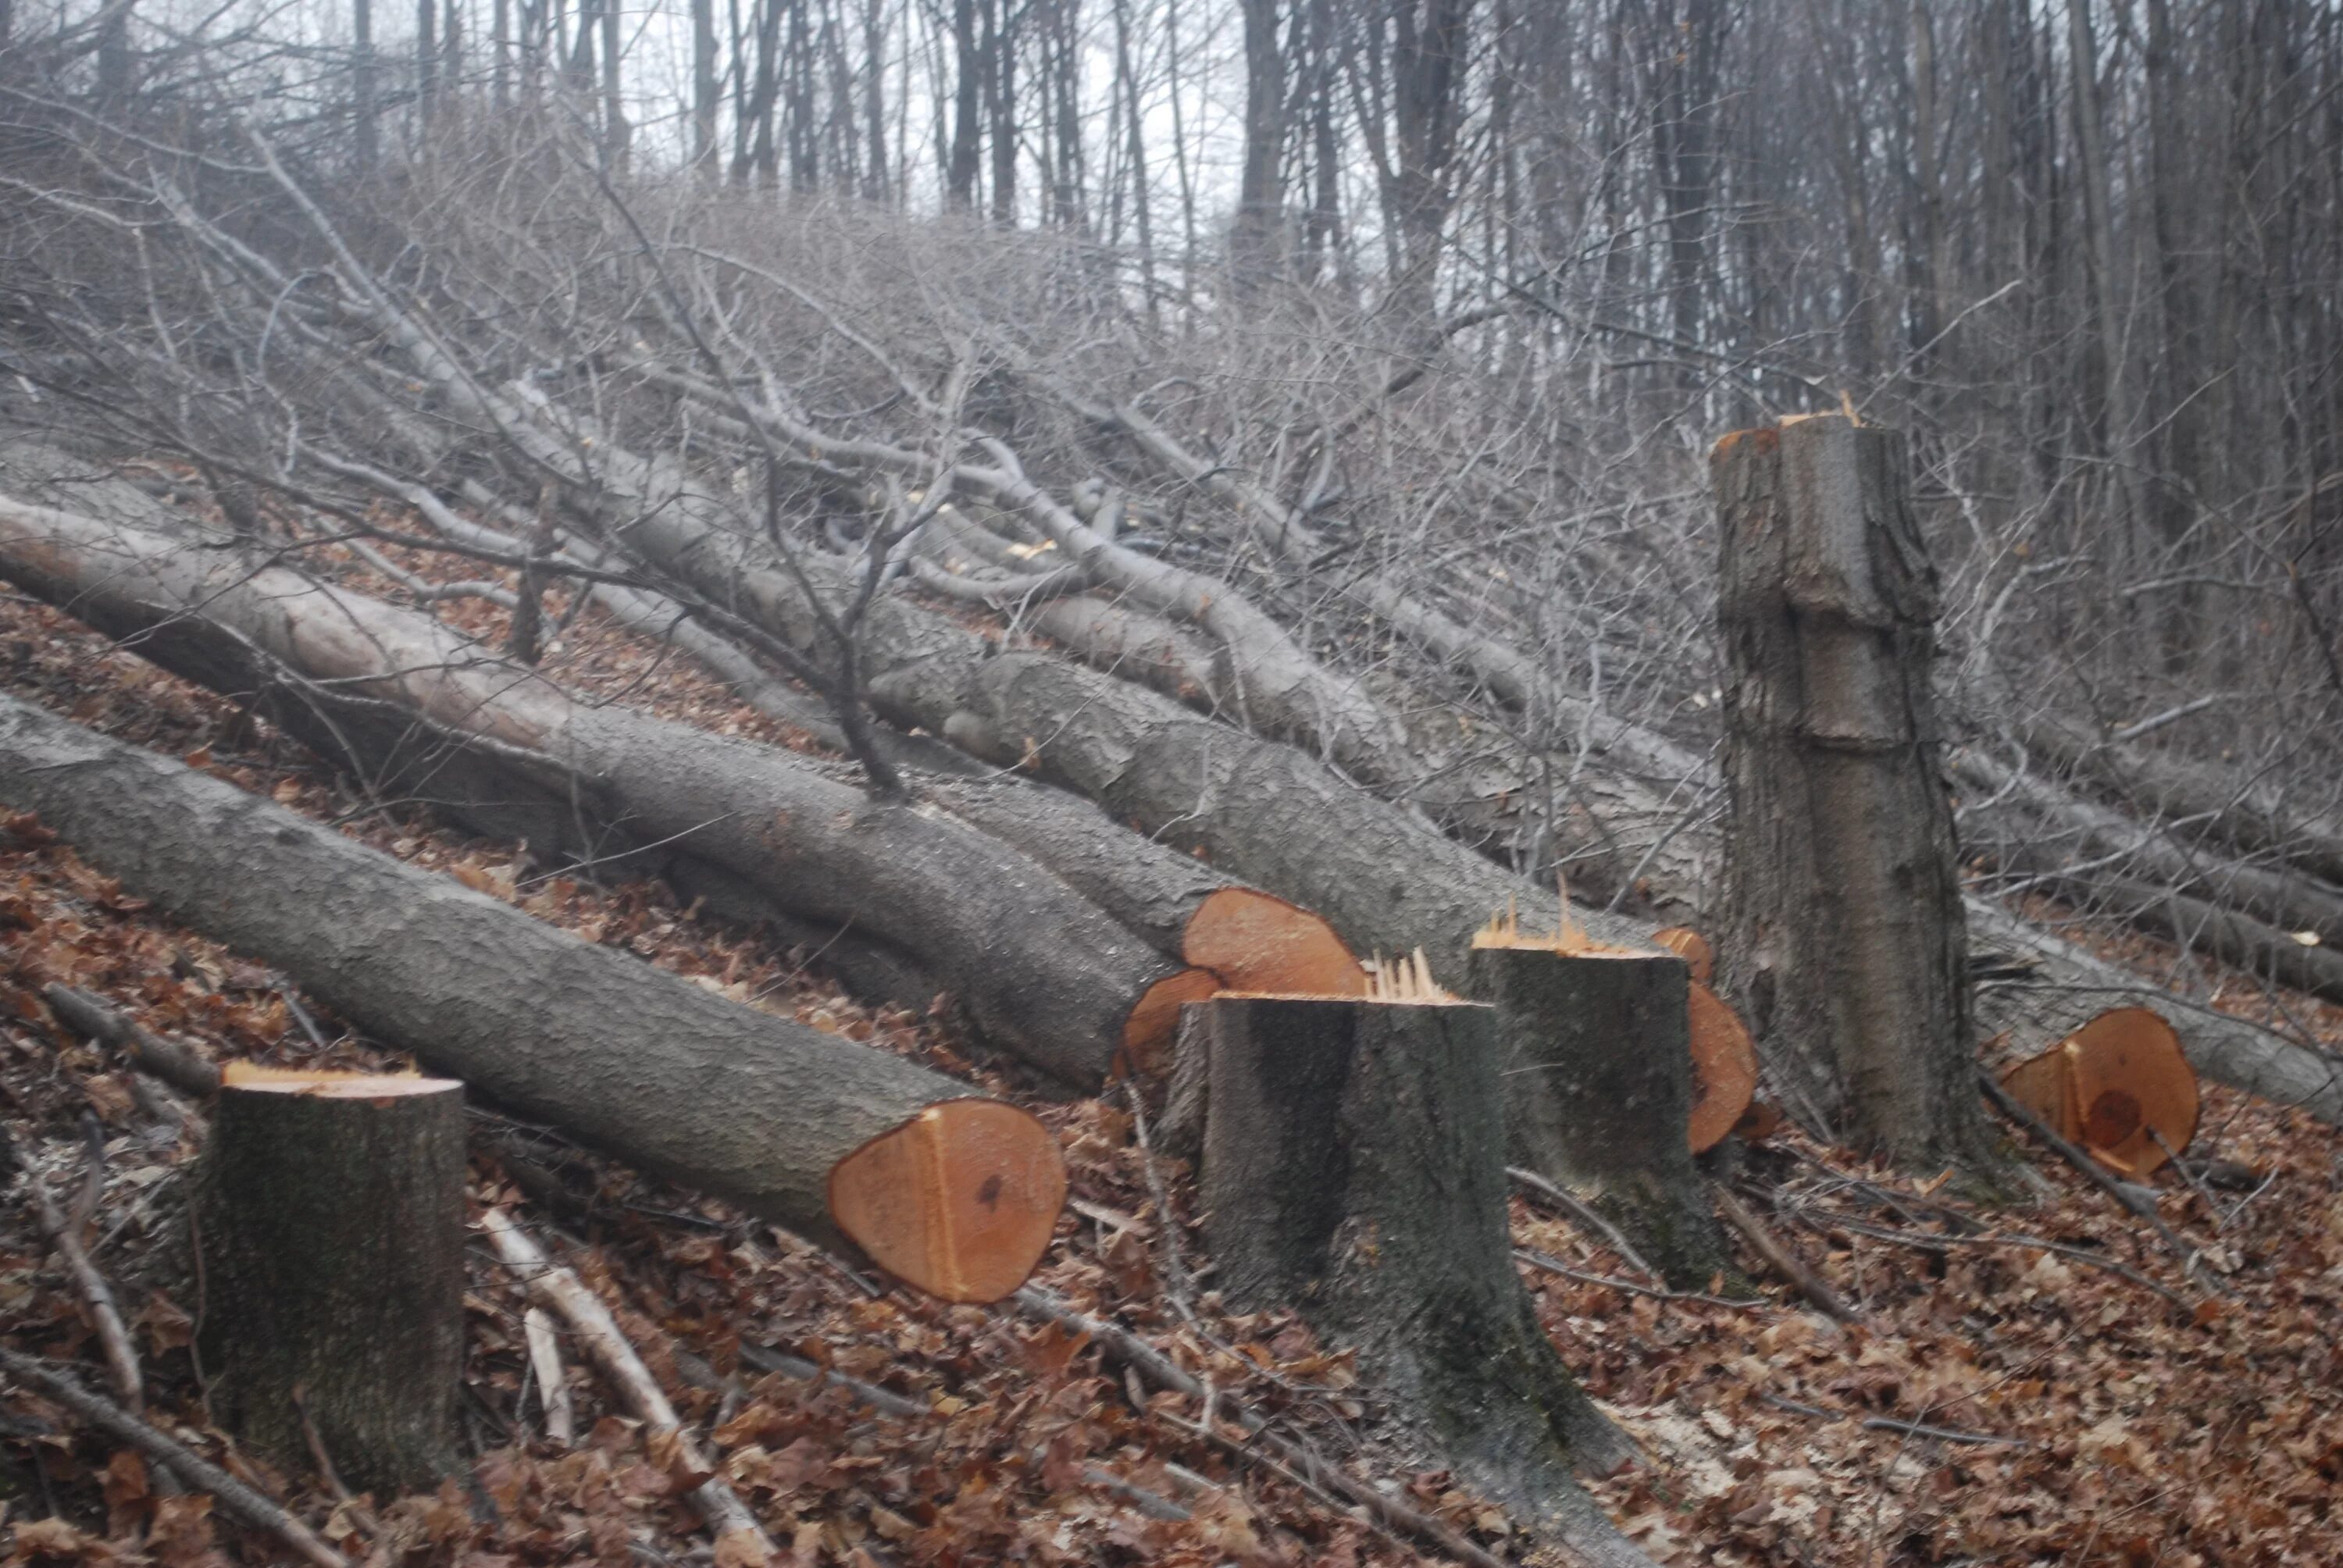 Cut down forest. Вырубка деревьев. Вырубка деревьев для бумаги. Спил деревьев в лесу. Фото спиленных деревьев в лесу.